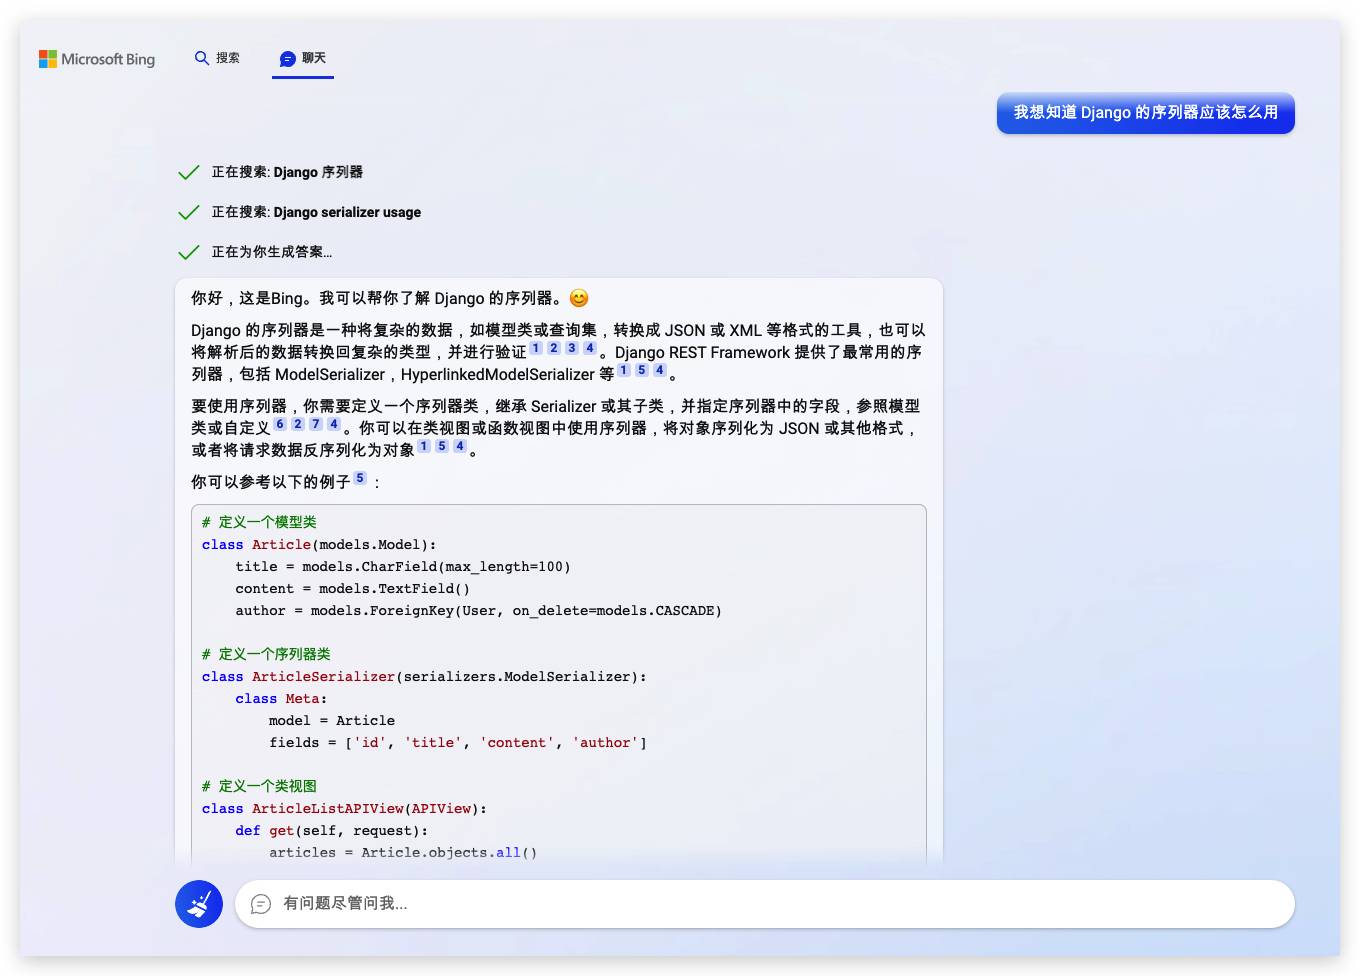 
Bing Chat 提炼中文关键词后转为了英文